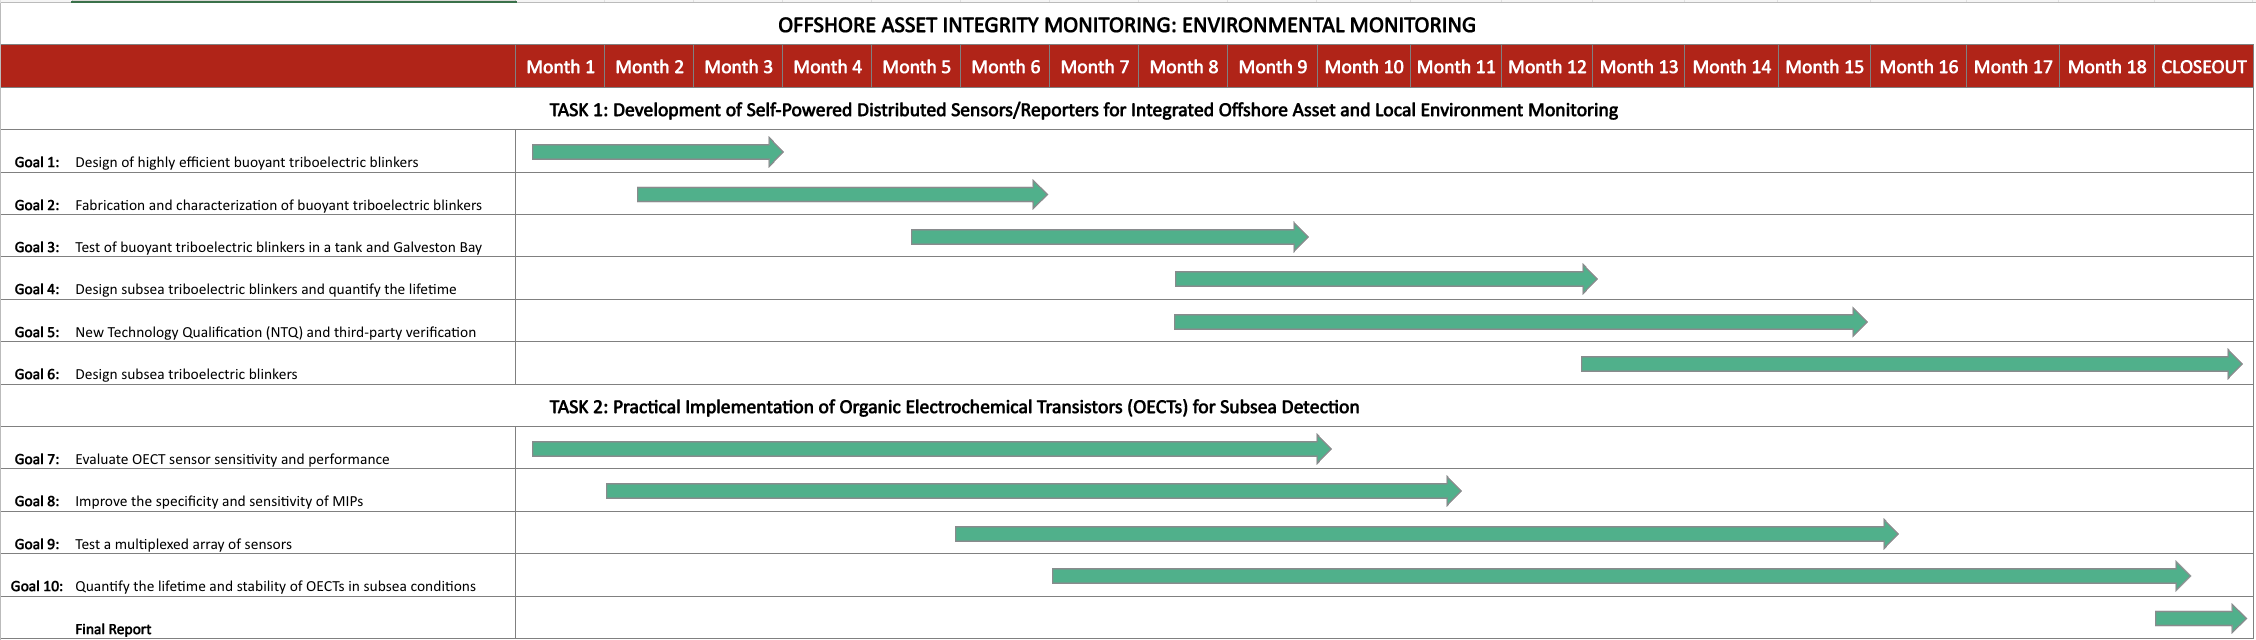 Gannt Chart - Offshore asset integrity monitoring: environmental monitoring